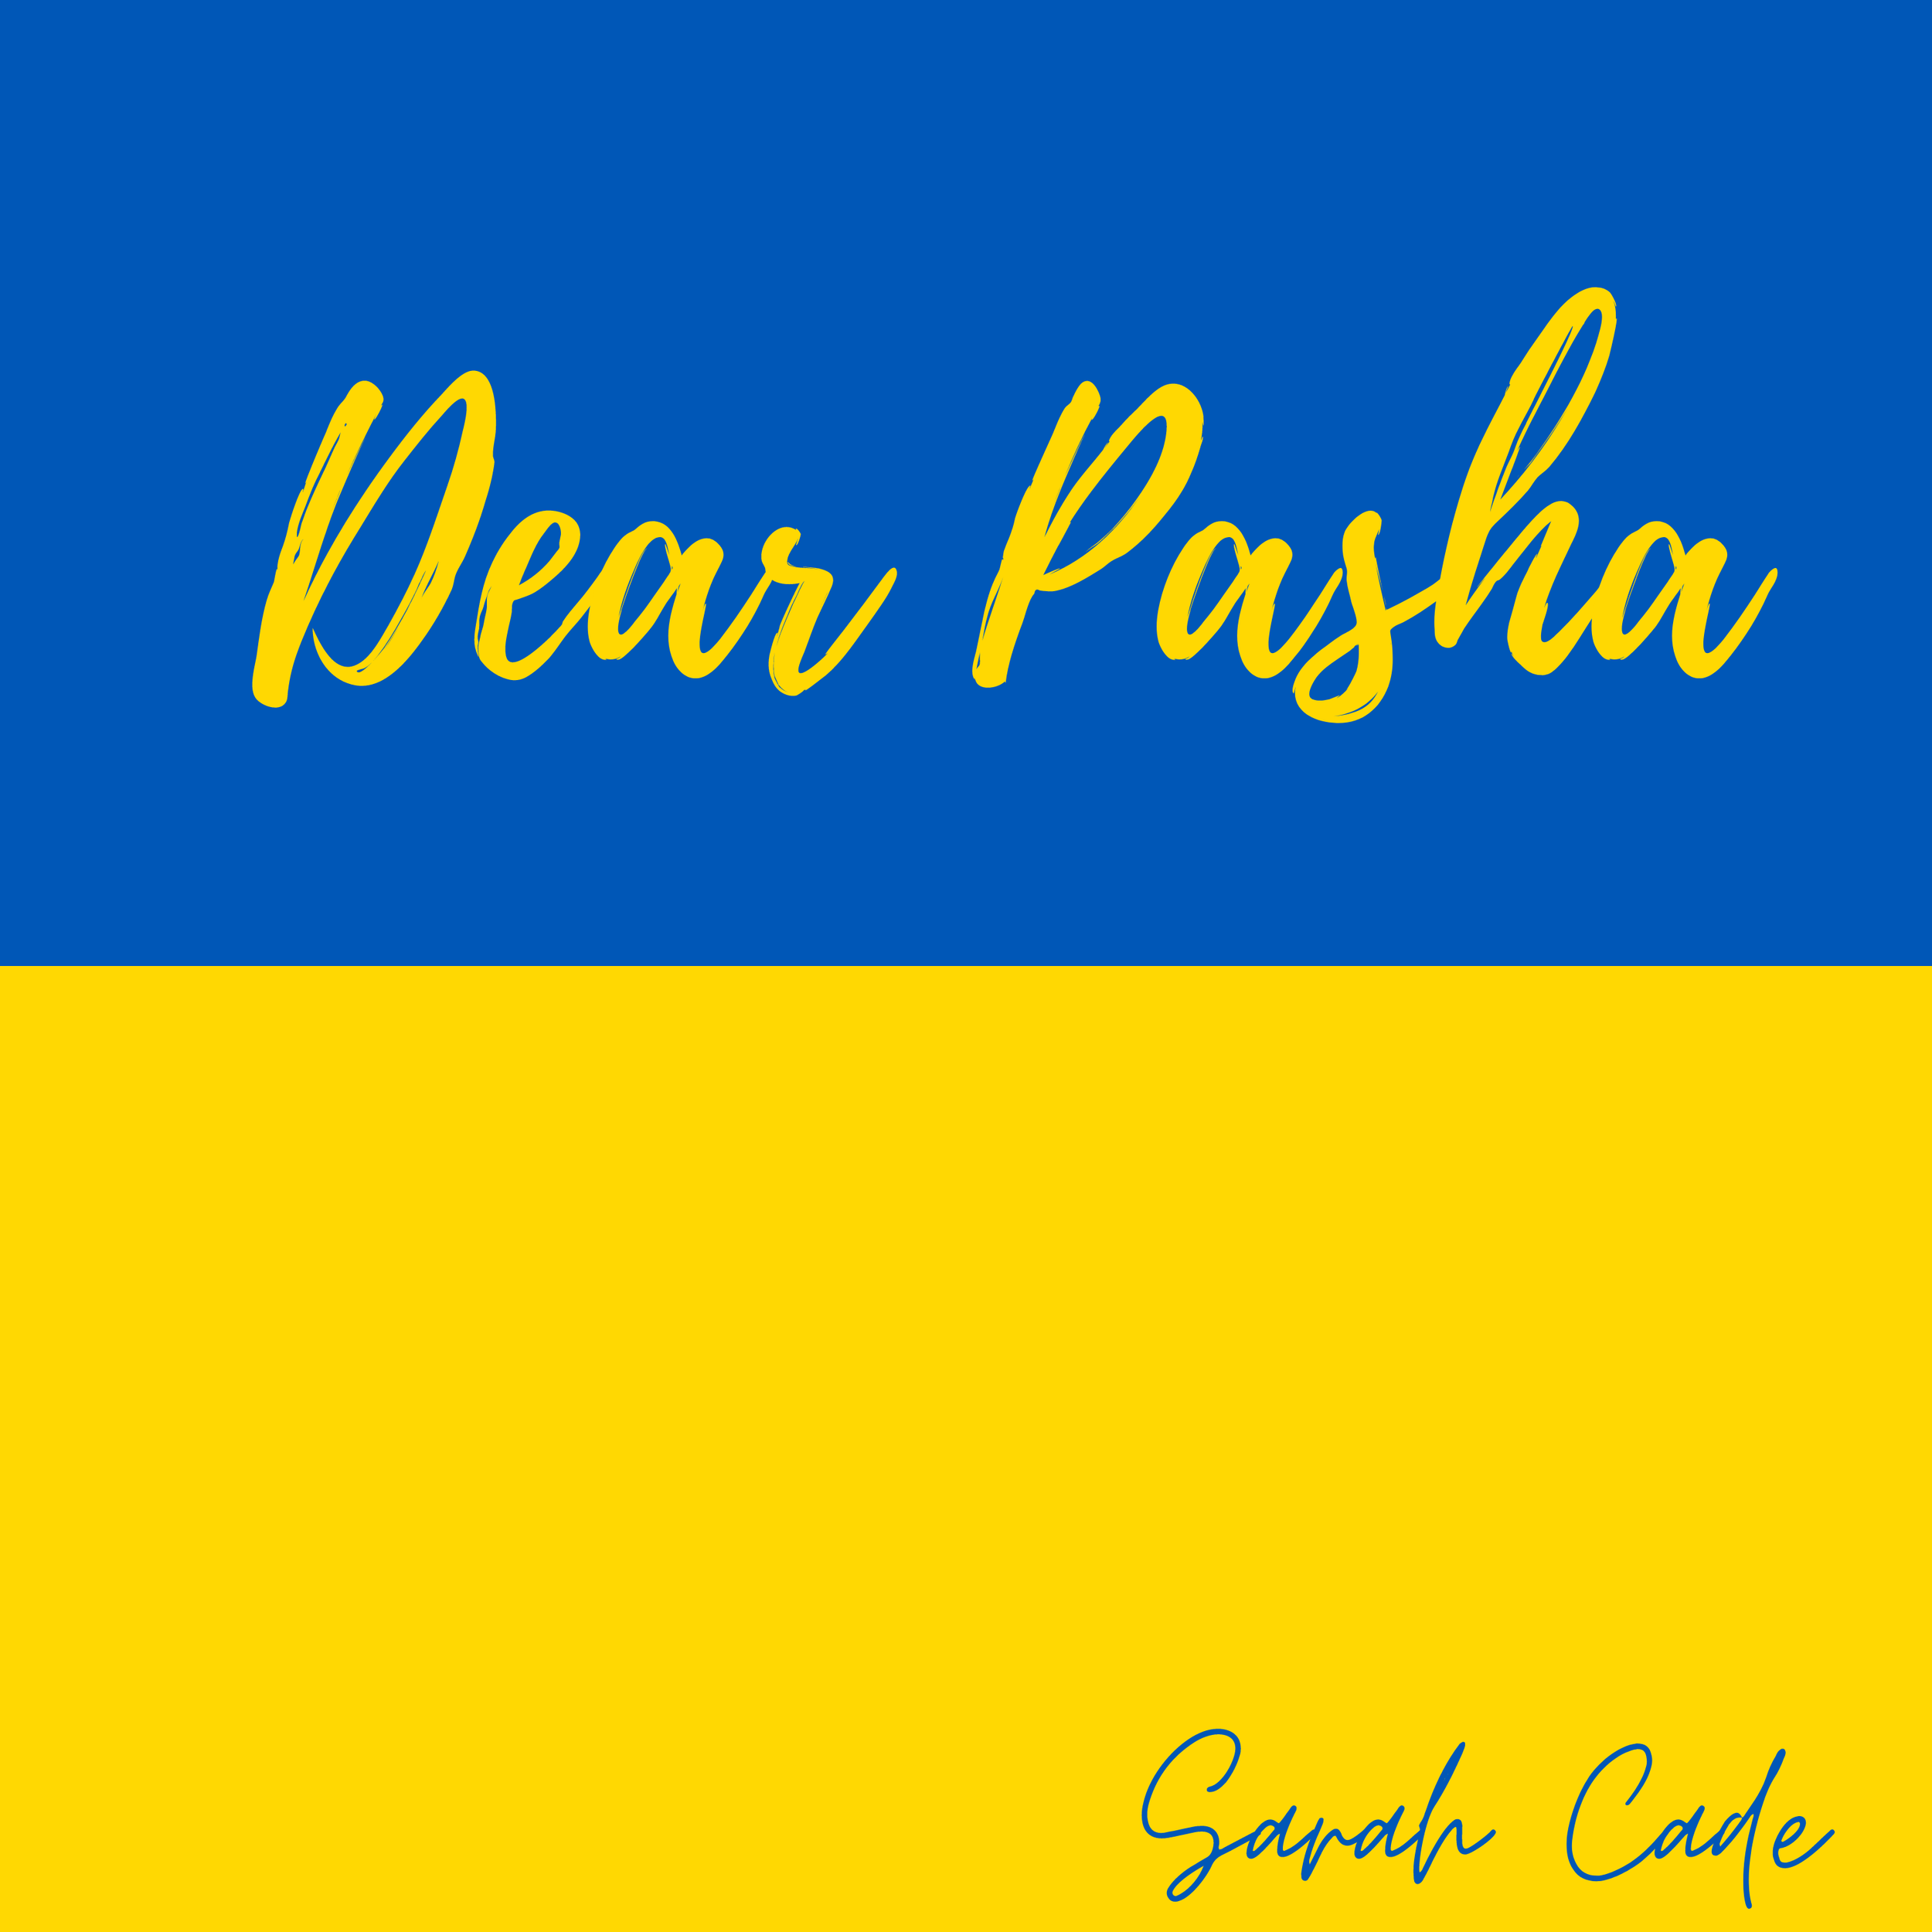 Dear Pasha (2).png